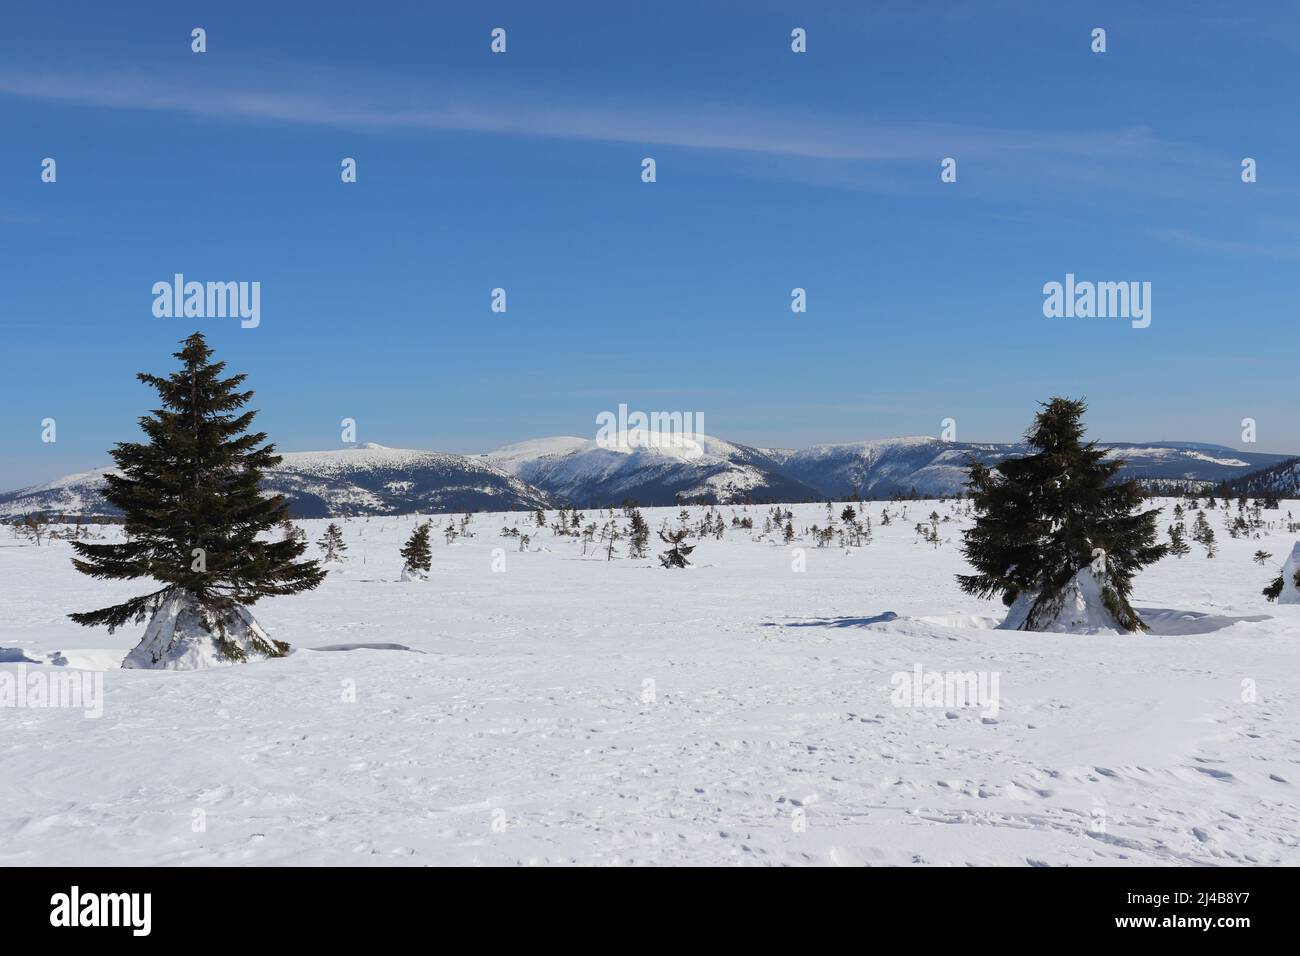 Winter scene in the upper parts of Krkonoše mountains (Giant Mountains), Czech Republic. Stock Photo